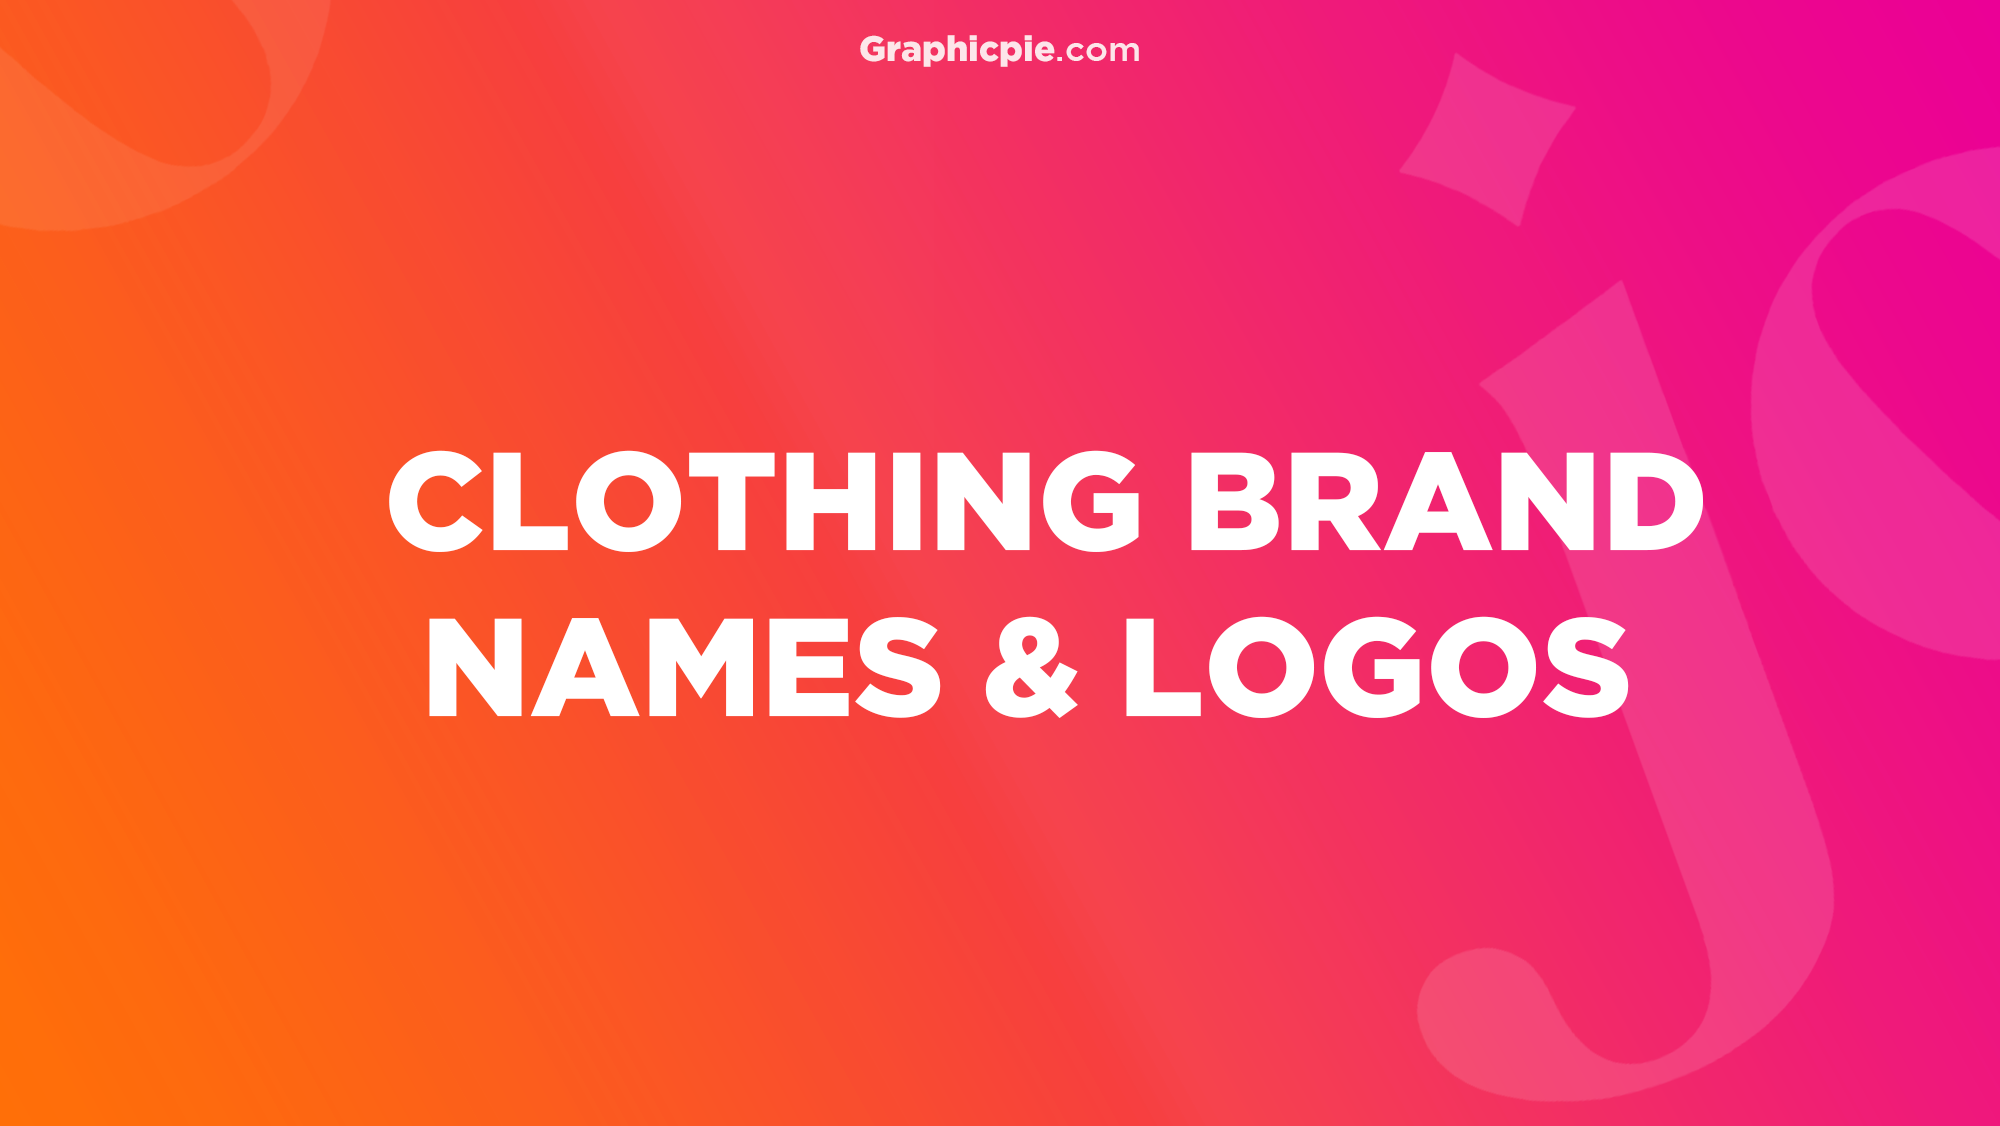 Fashion And Clothing Logos And Names